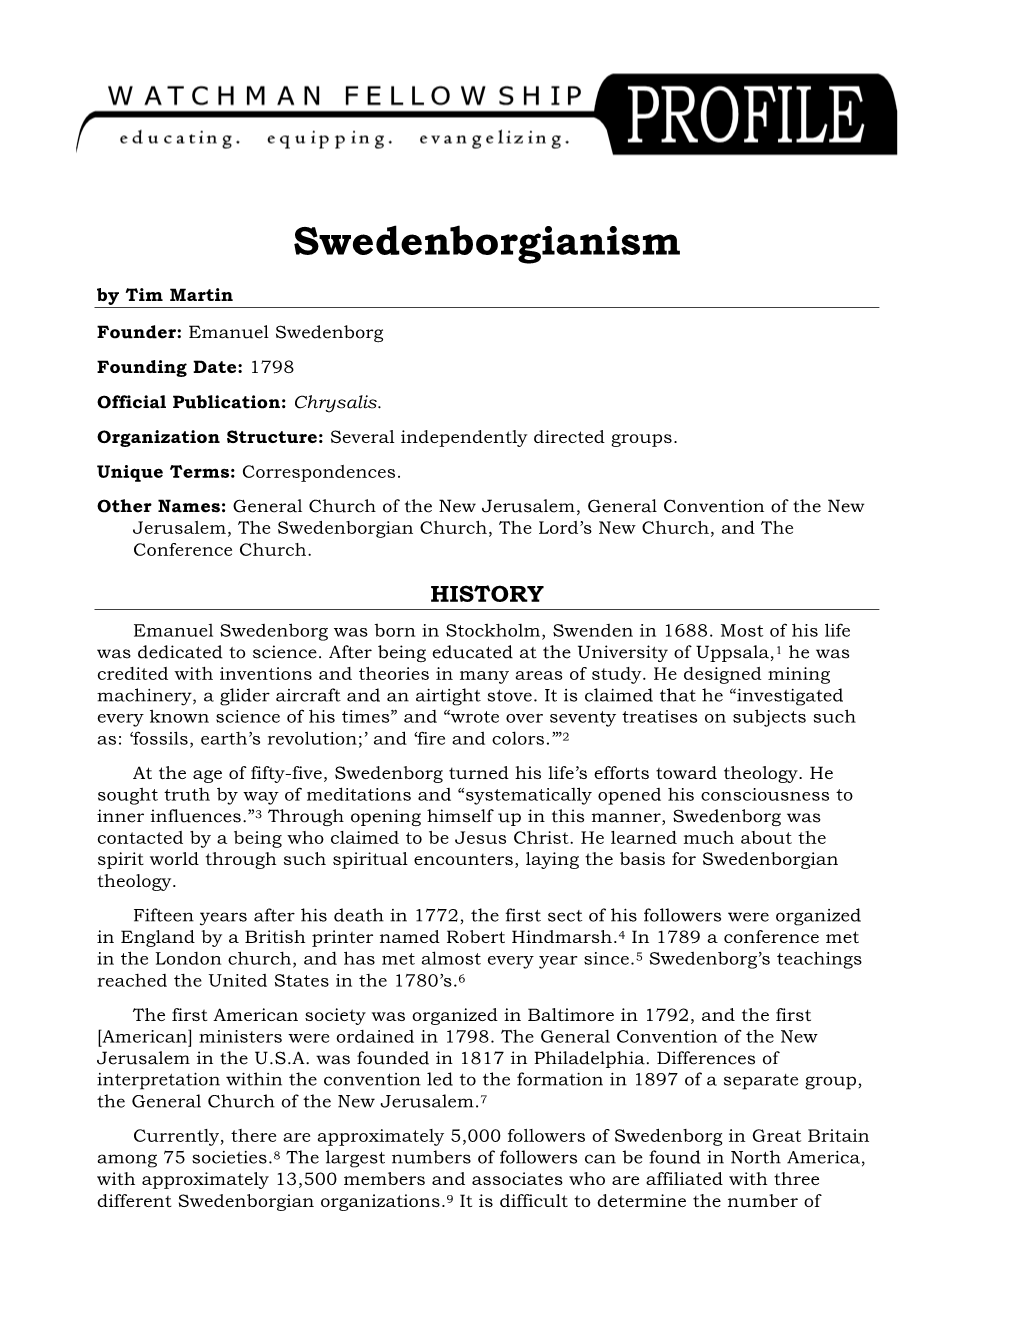 Swedenborgianism Profile